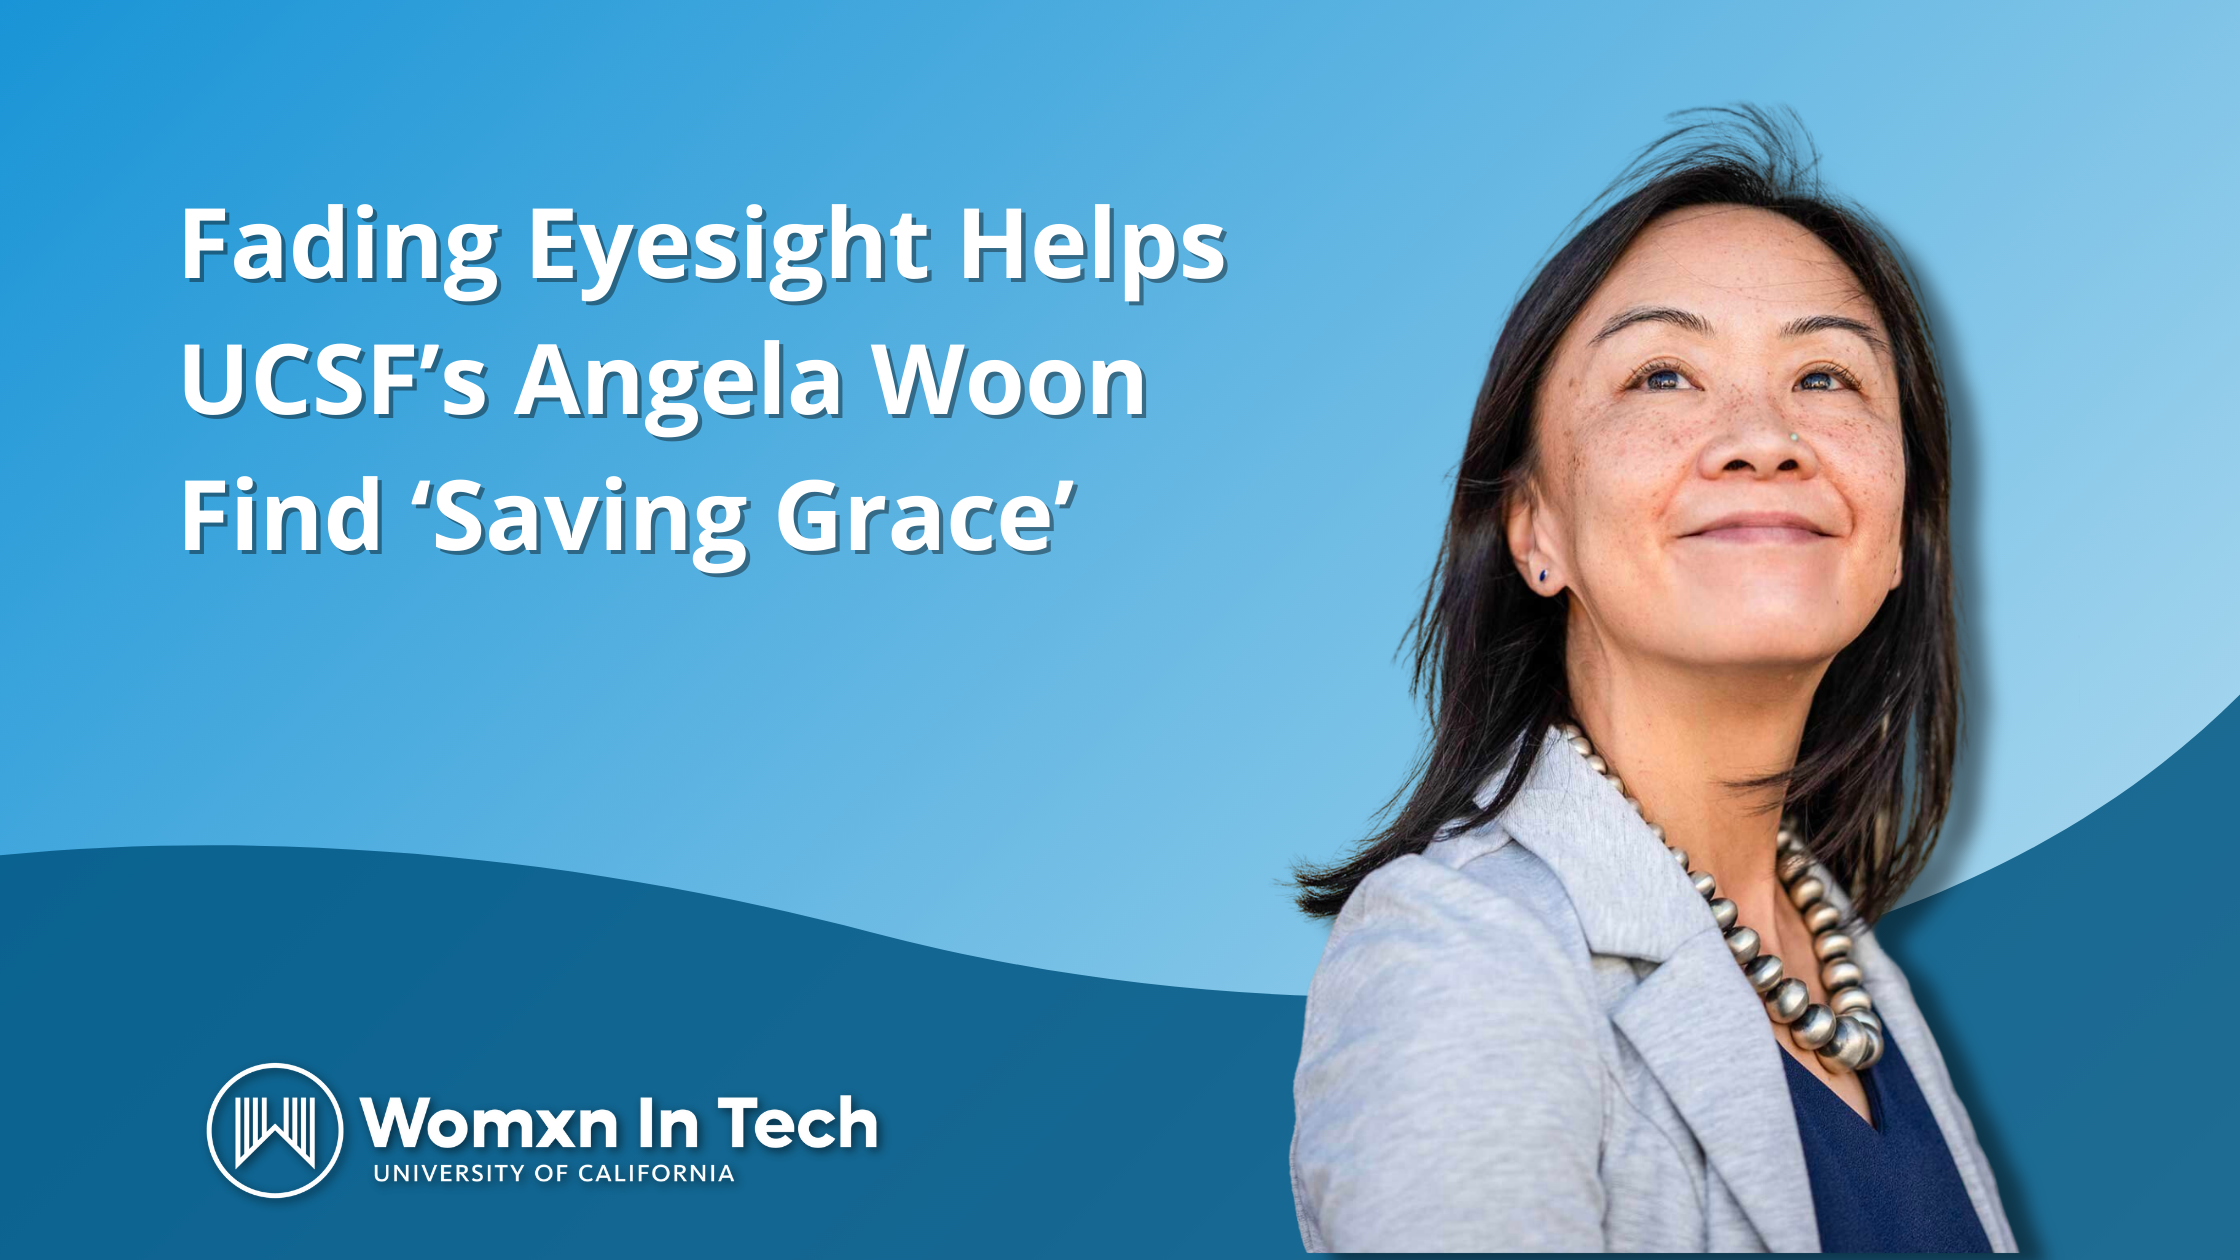 Fading Eyesight Helps UCSF’s Angela Woon Find ‘Saving Grace’